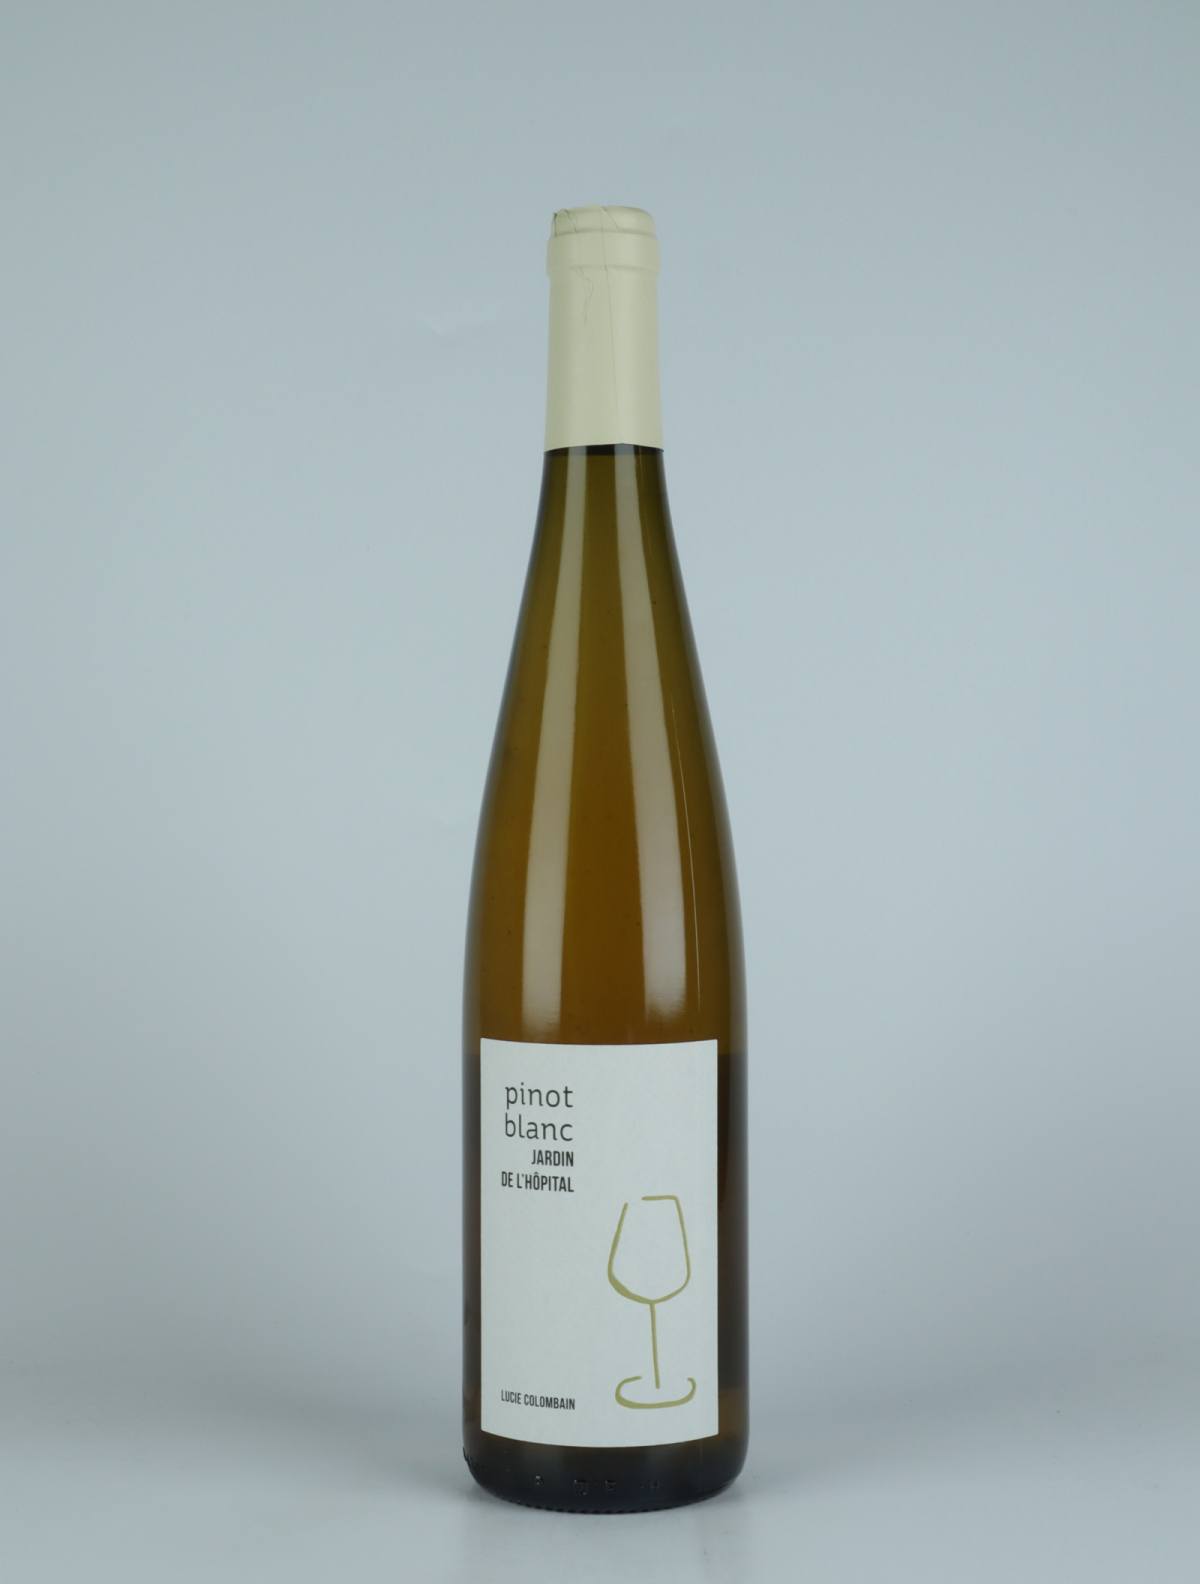 A bottle 2020 Pinot Blanc - Jardin de l'Hôpital White wine from Lucie Colombain, Alsace in France